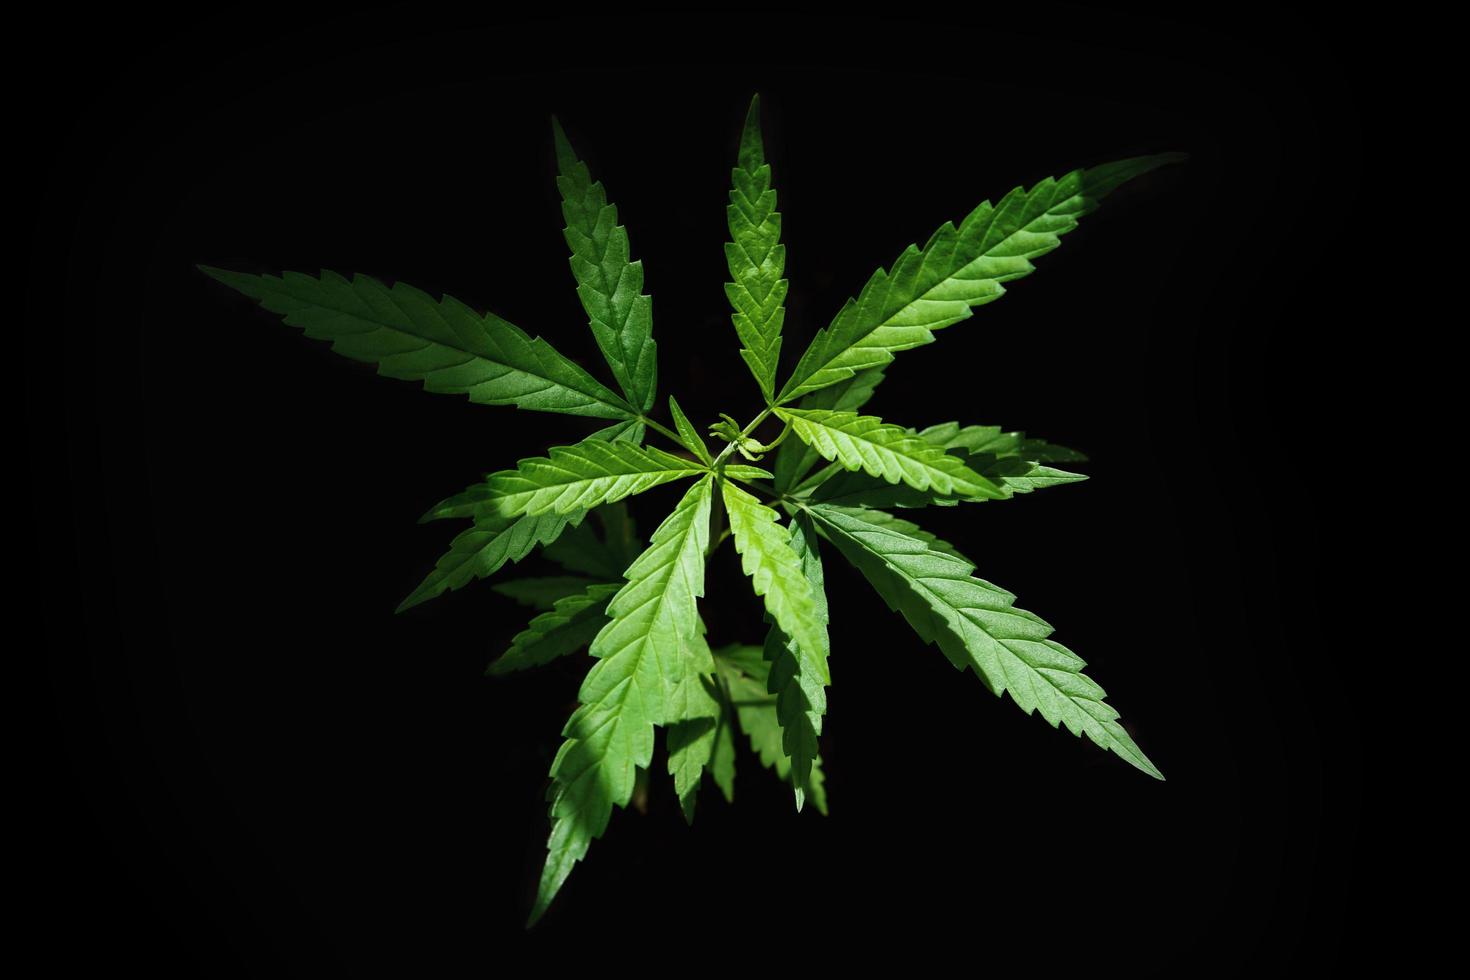 fresh cannabis leaf isolate on black background photo